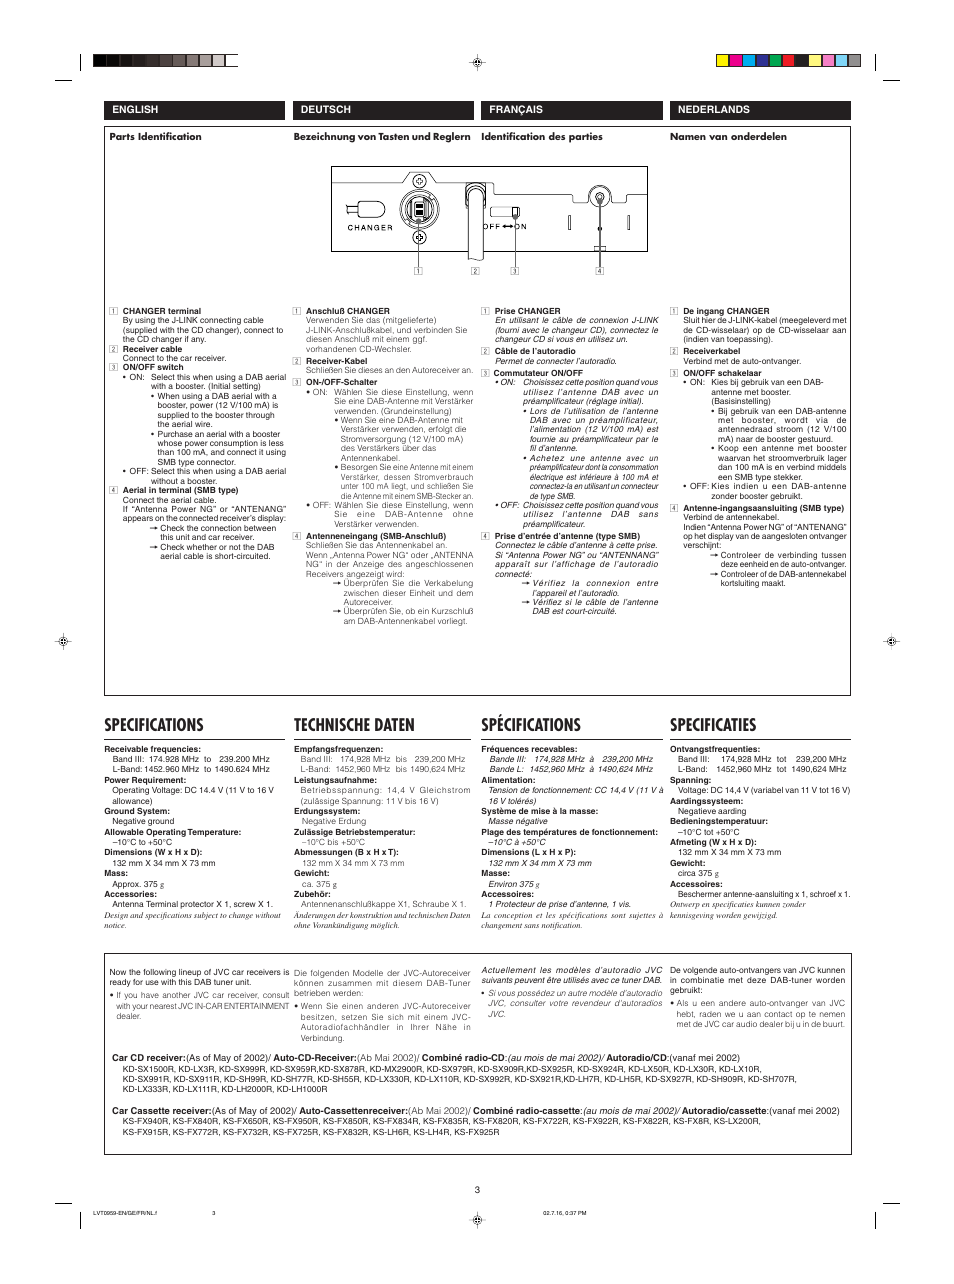 Technische daten, Spécifications, Specifications | JVC KT-DB1000 User  Manual | Page 3 / 4 | Original mode